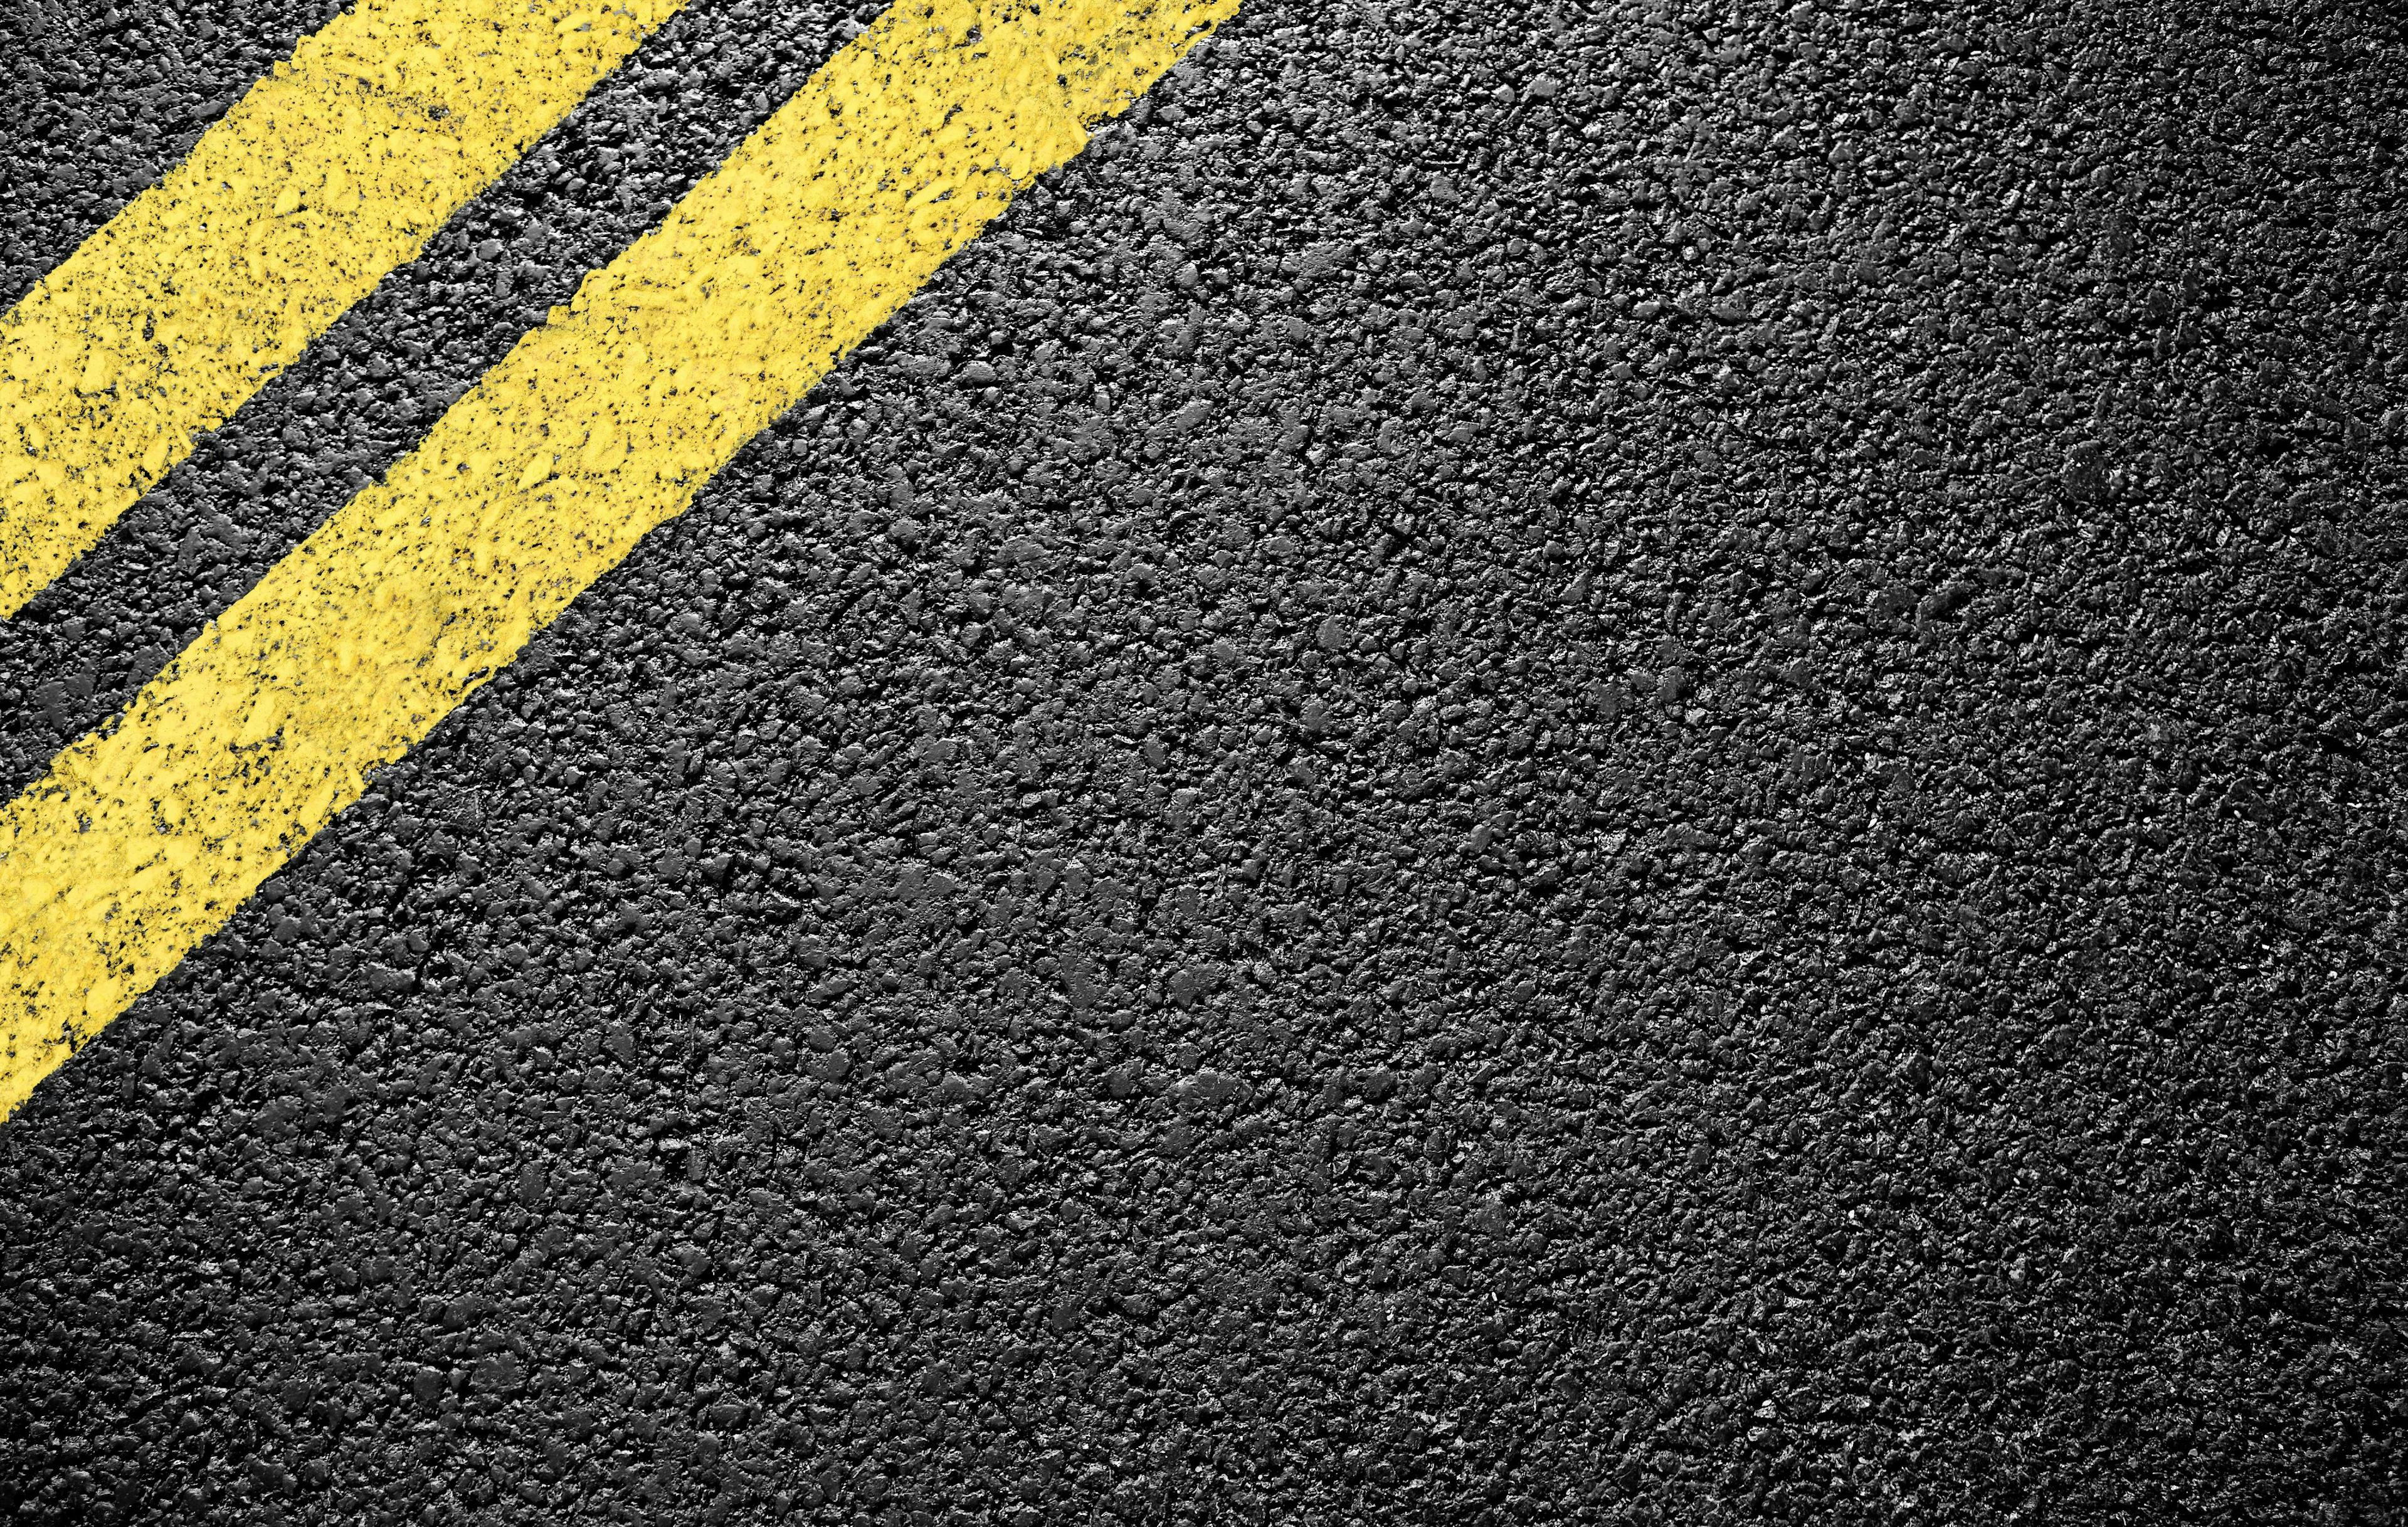 black asphalt yellow markings | Image Credit: © Vitaly Krivosheev - stock.adobe.com